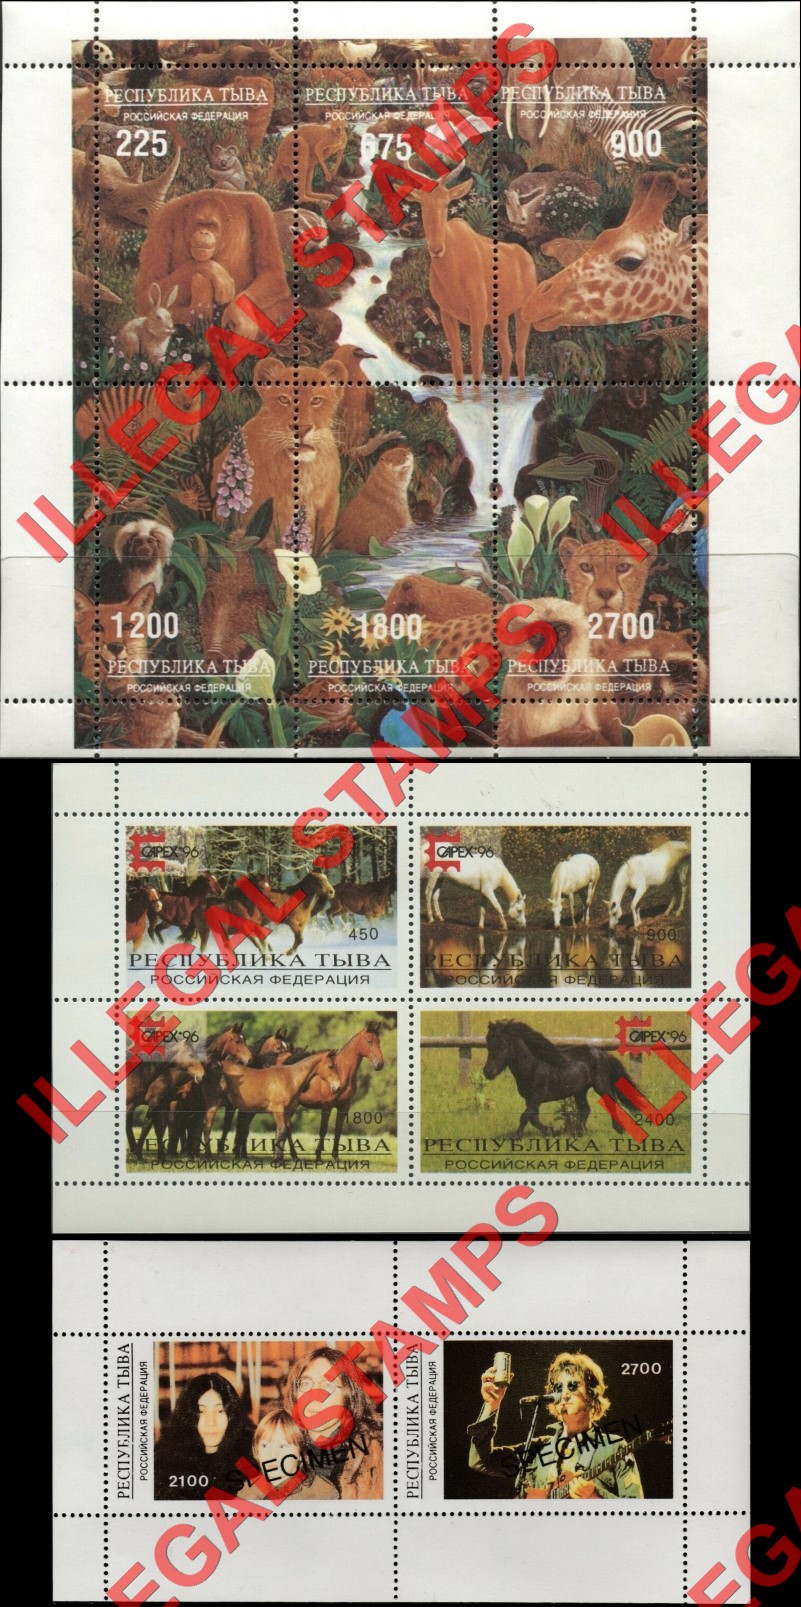 Republic of Tuva 1996 Counterfeit Illegal Stamps (Part 1)